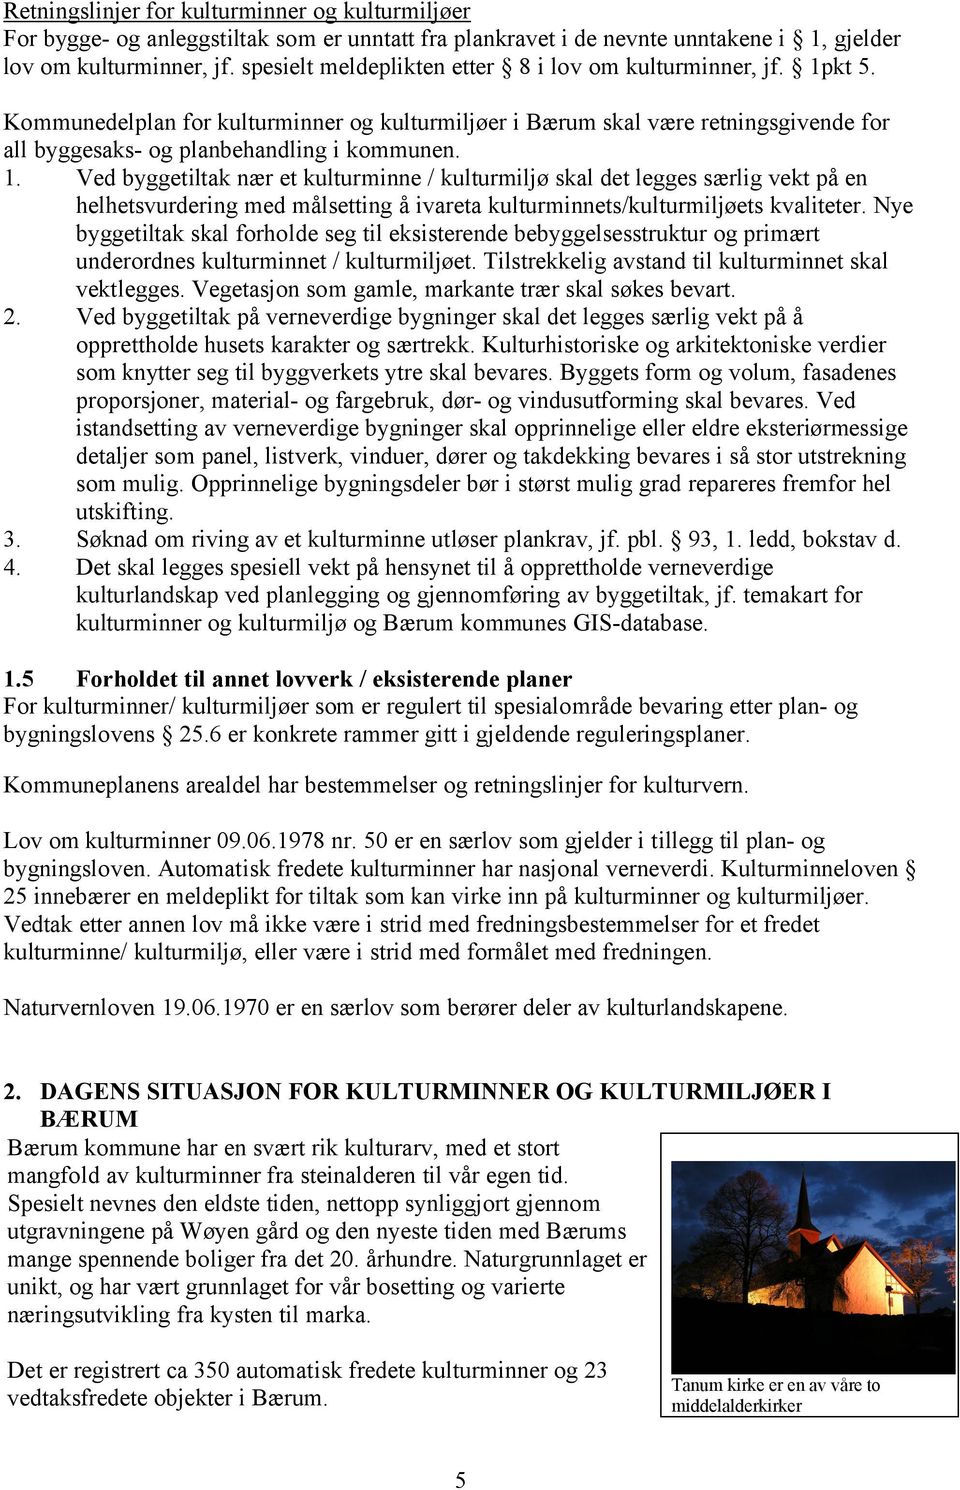 kt 5. Kommunedelplan for kulturminner og kulturmiljøer i Bærum skal være retningsgivende for all byggesaks- og planbehandling i kommunen. 1.